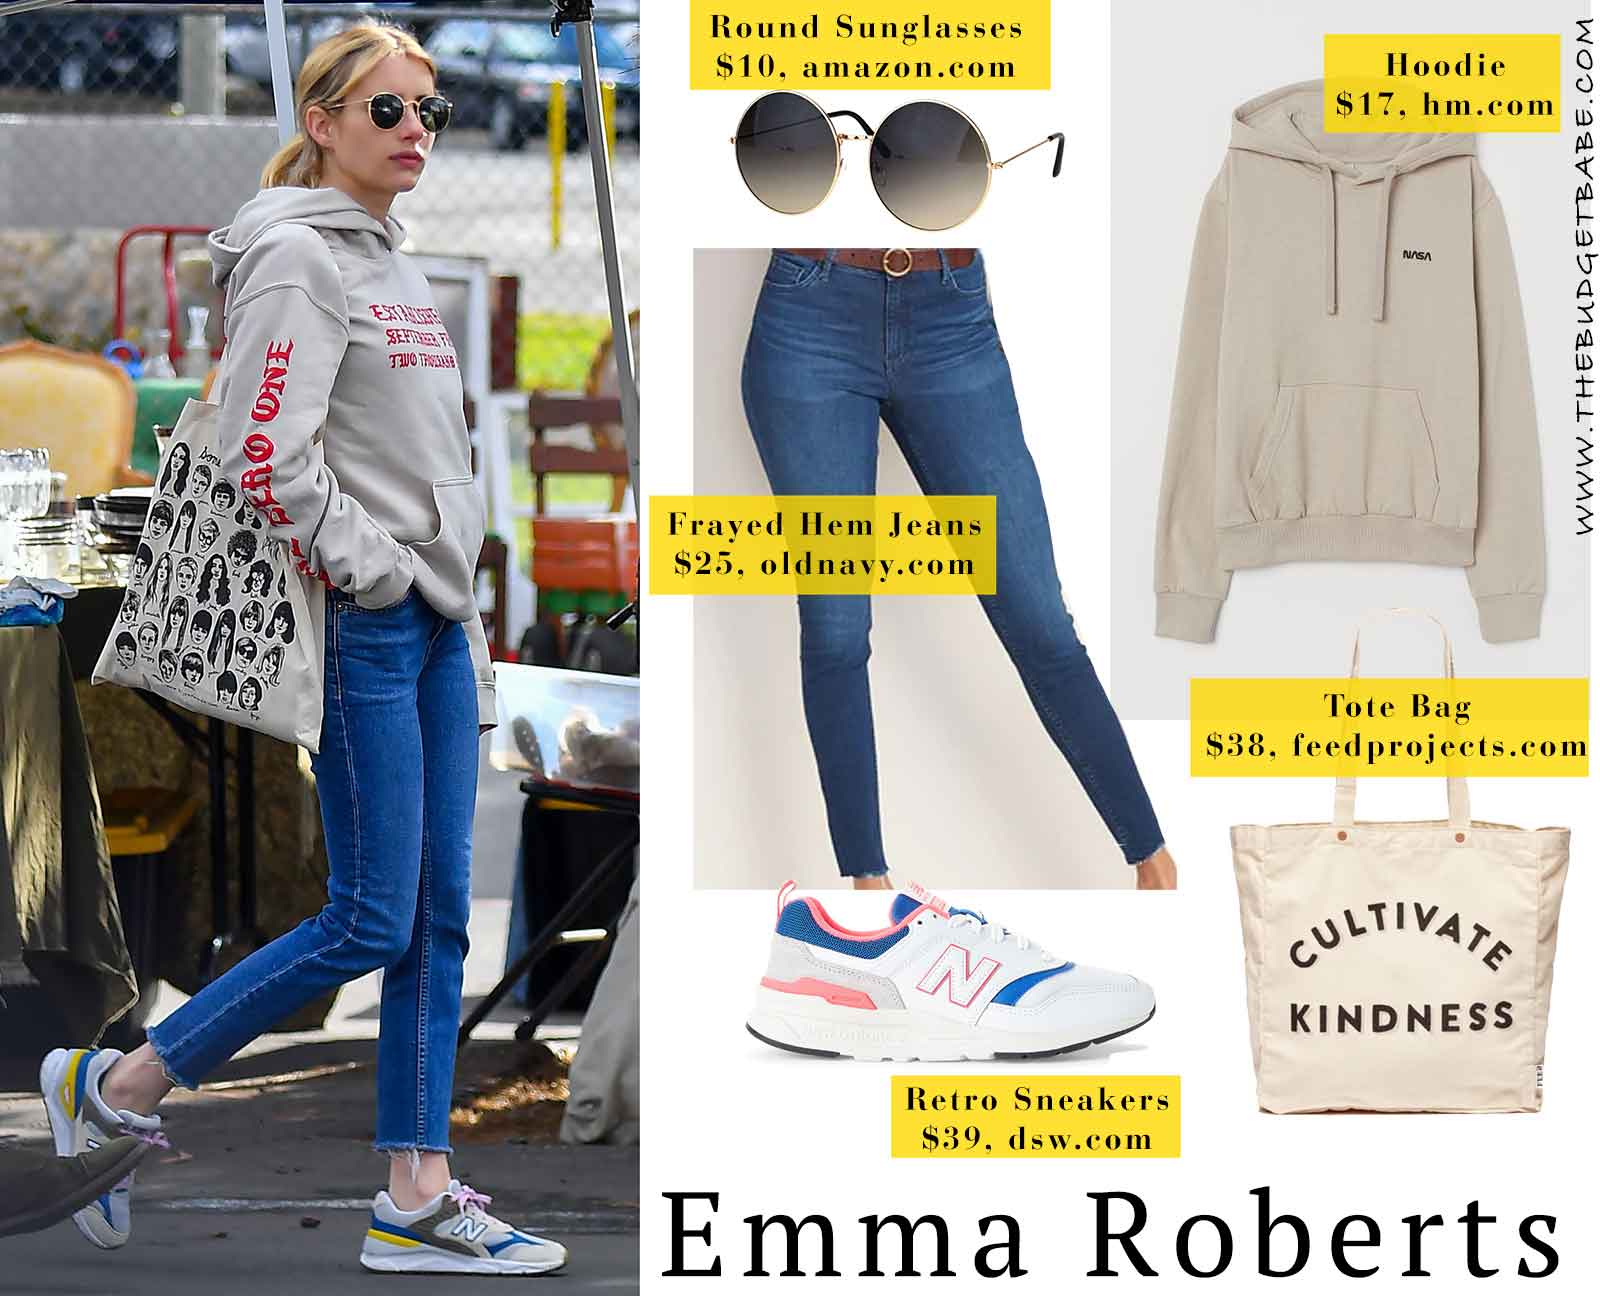 Emma Roberts One Nine Zero hoodie and New Balance sneakers